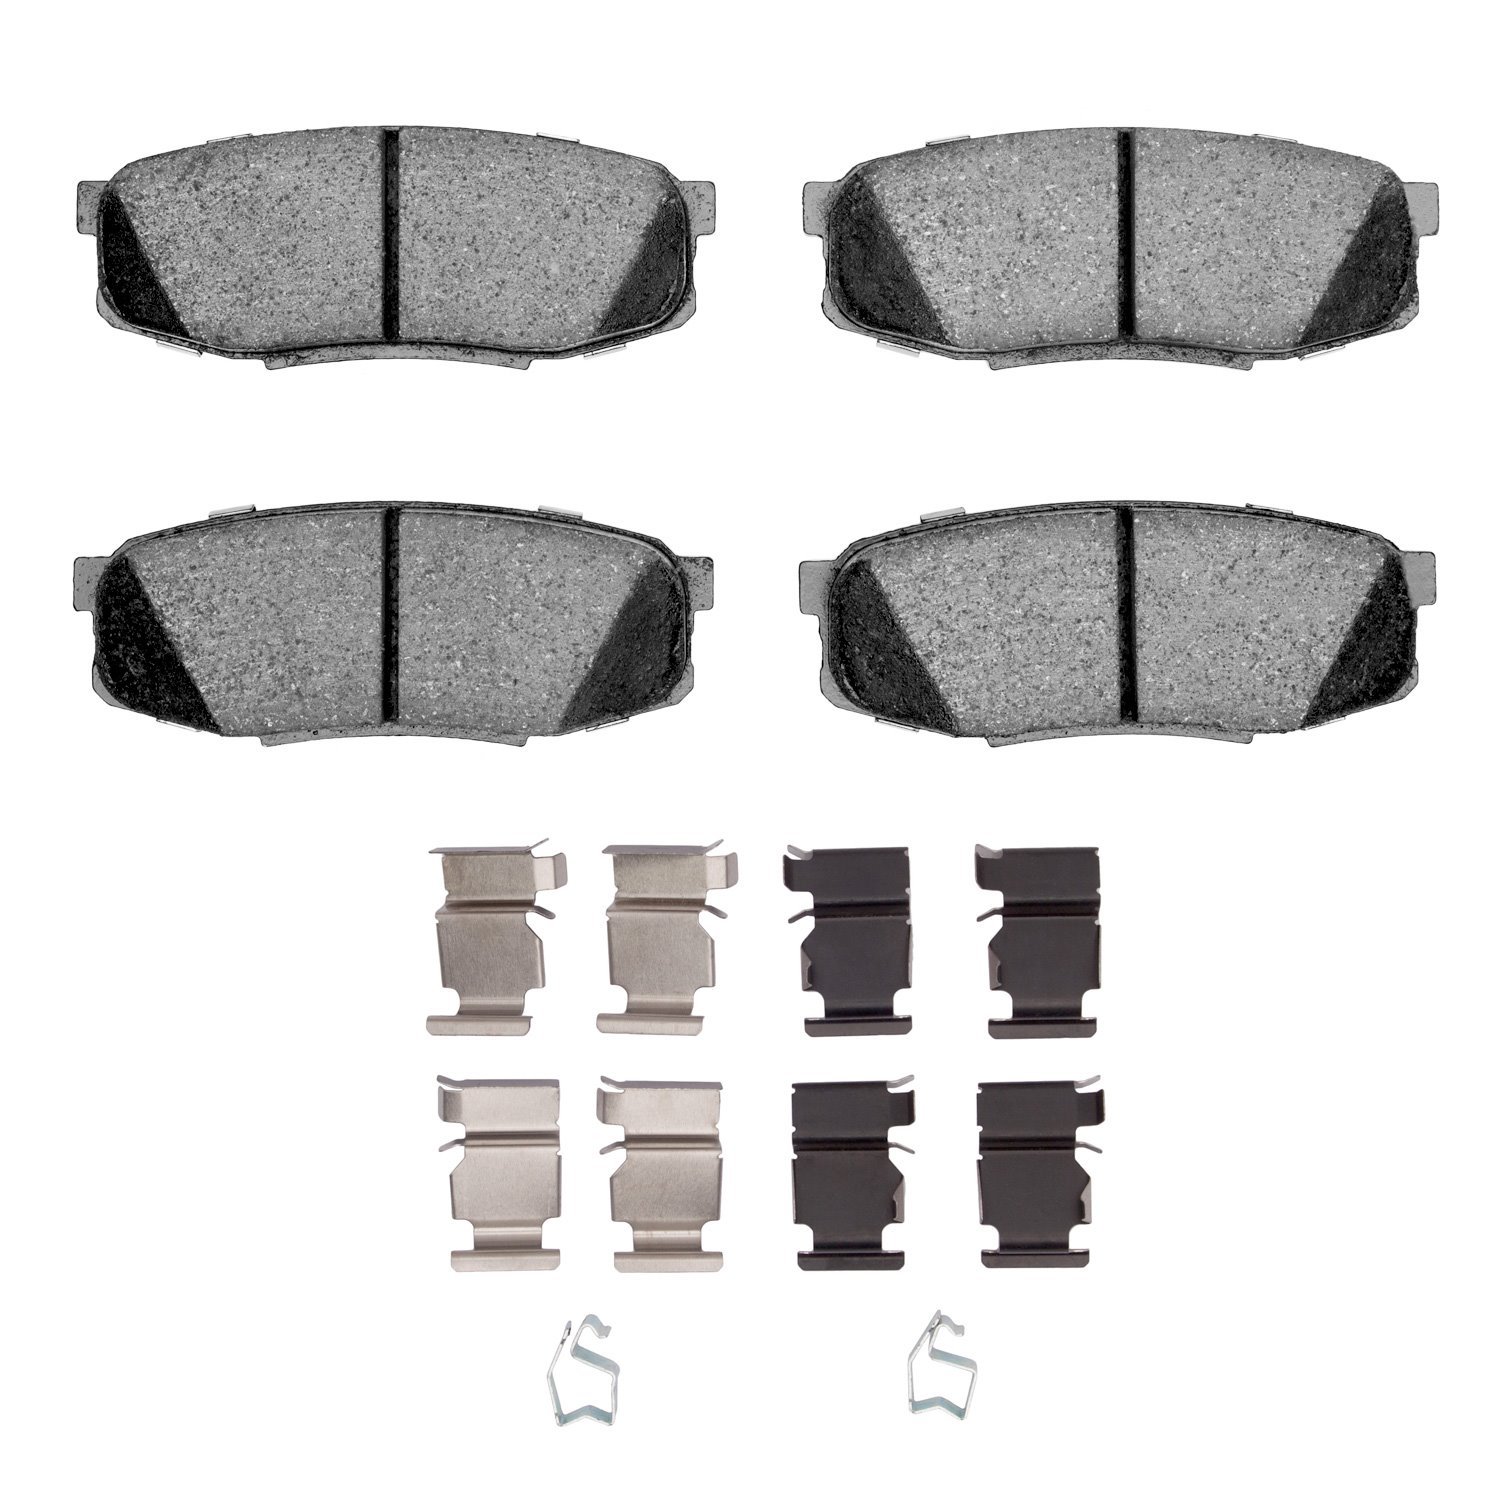 1310-1304-01 3000-Series Ceramic Brake Pads & Hardware Kit, Fits Select Lexus/Toyota/Scion, Position: Rear